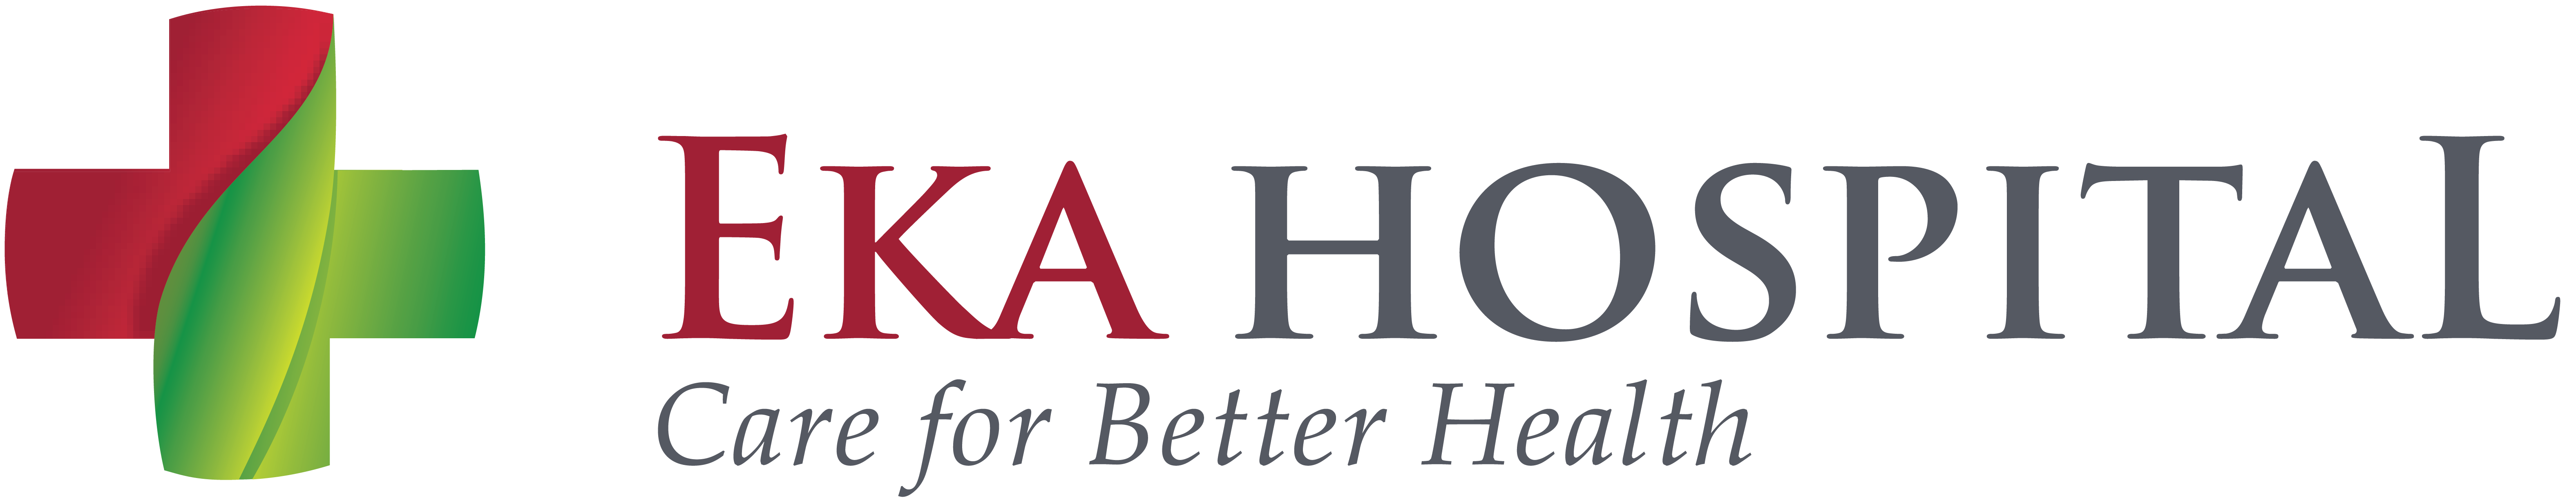 Eka Hospital Logo